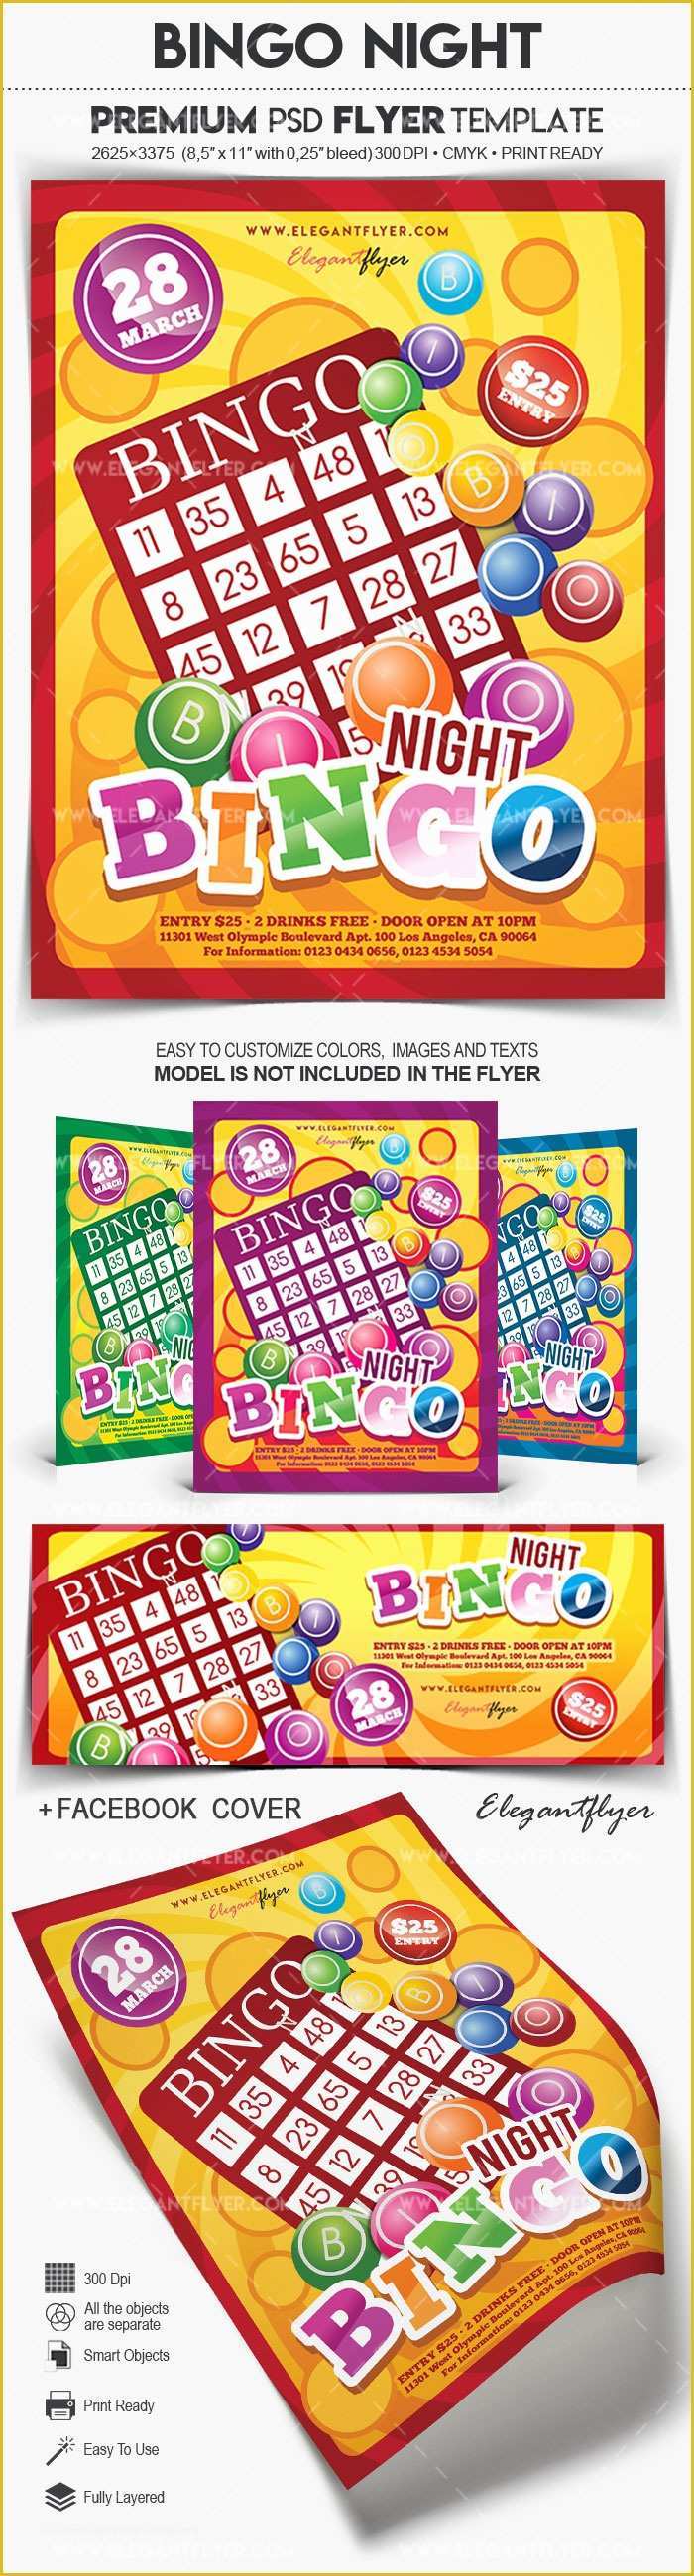 Free Bingo Night Flyer Template Of Bingo Night – Flyer Psd Template – by Elegantflyer